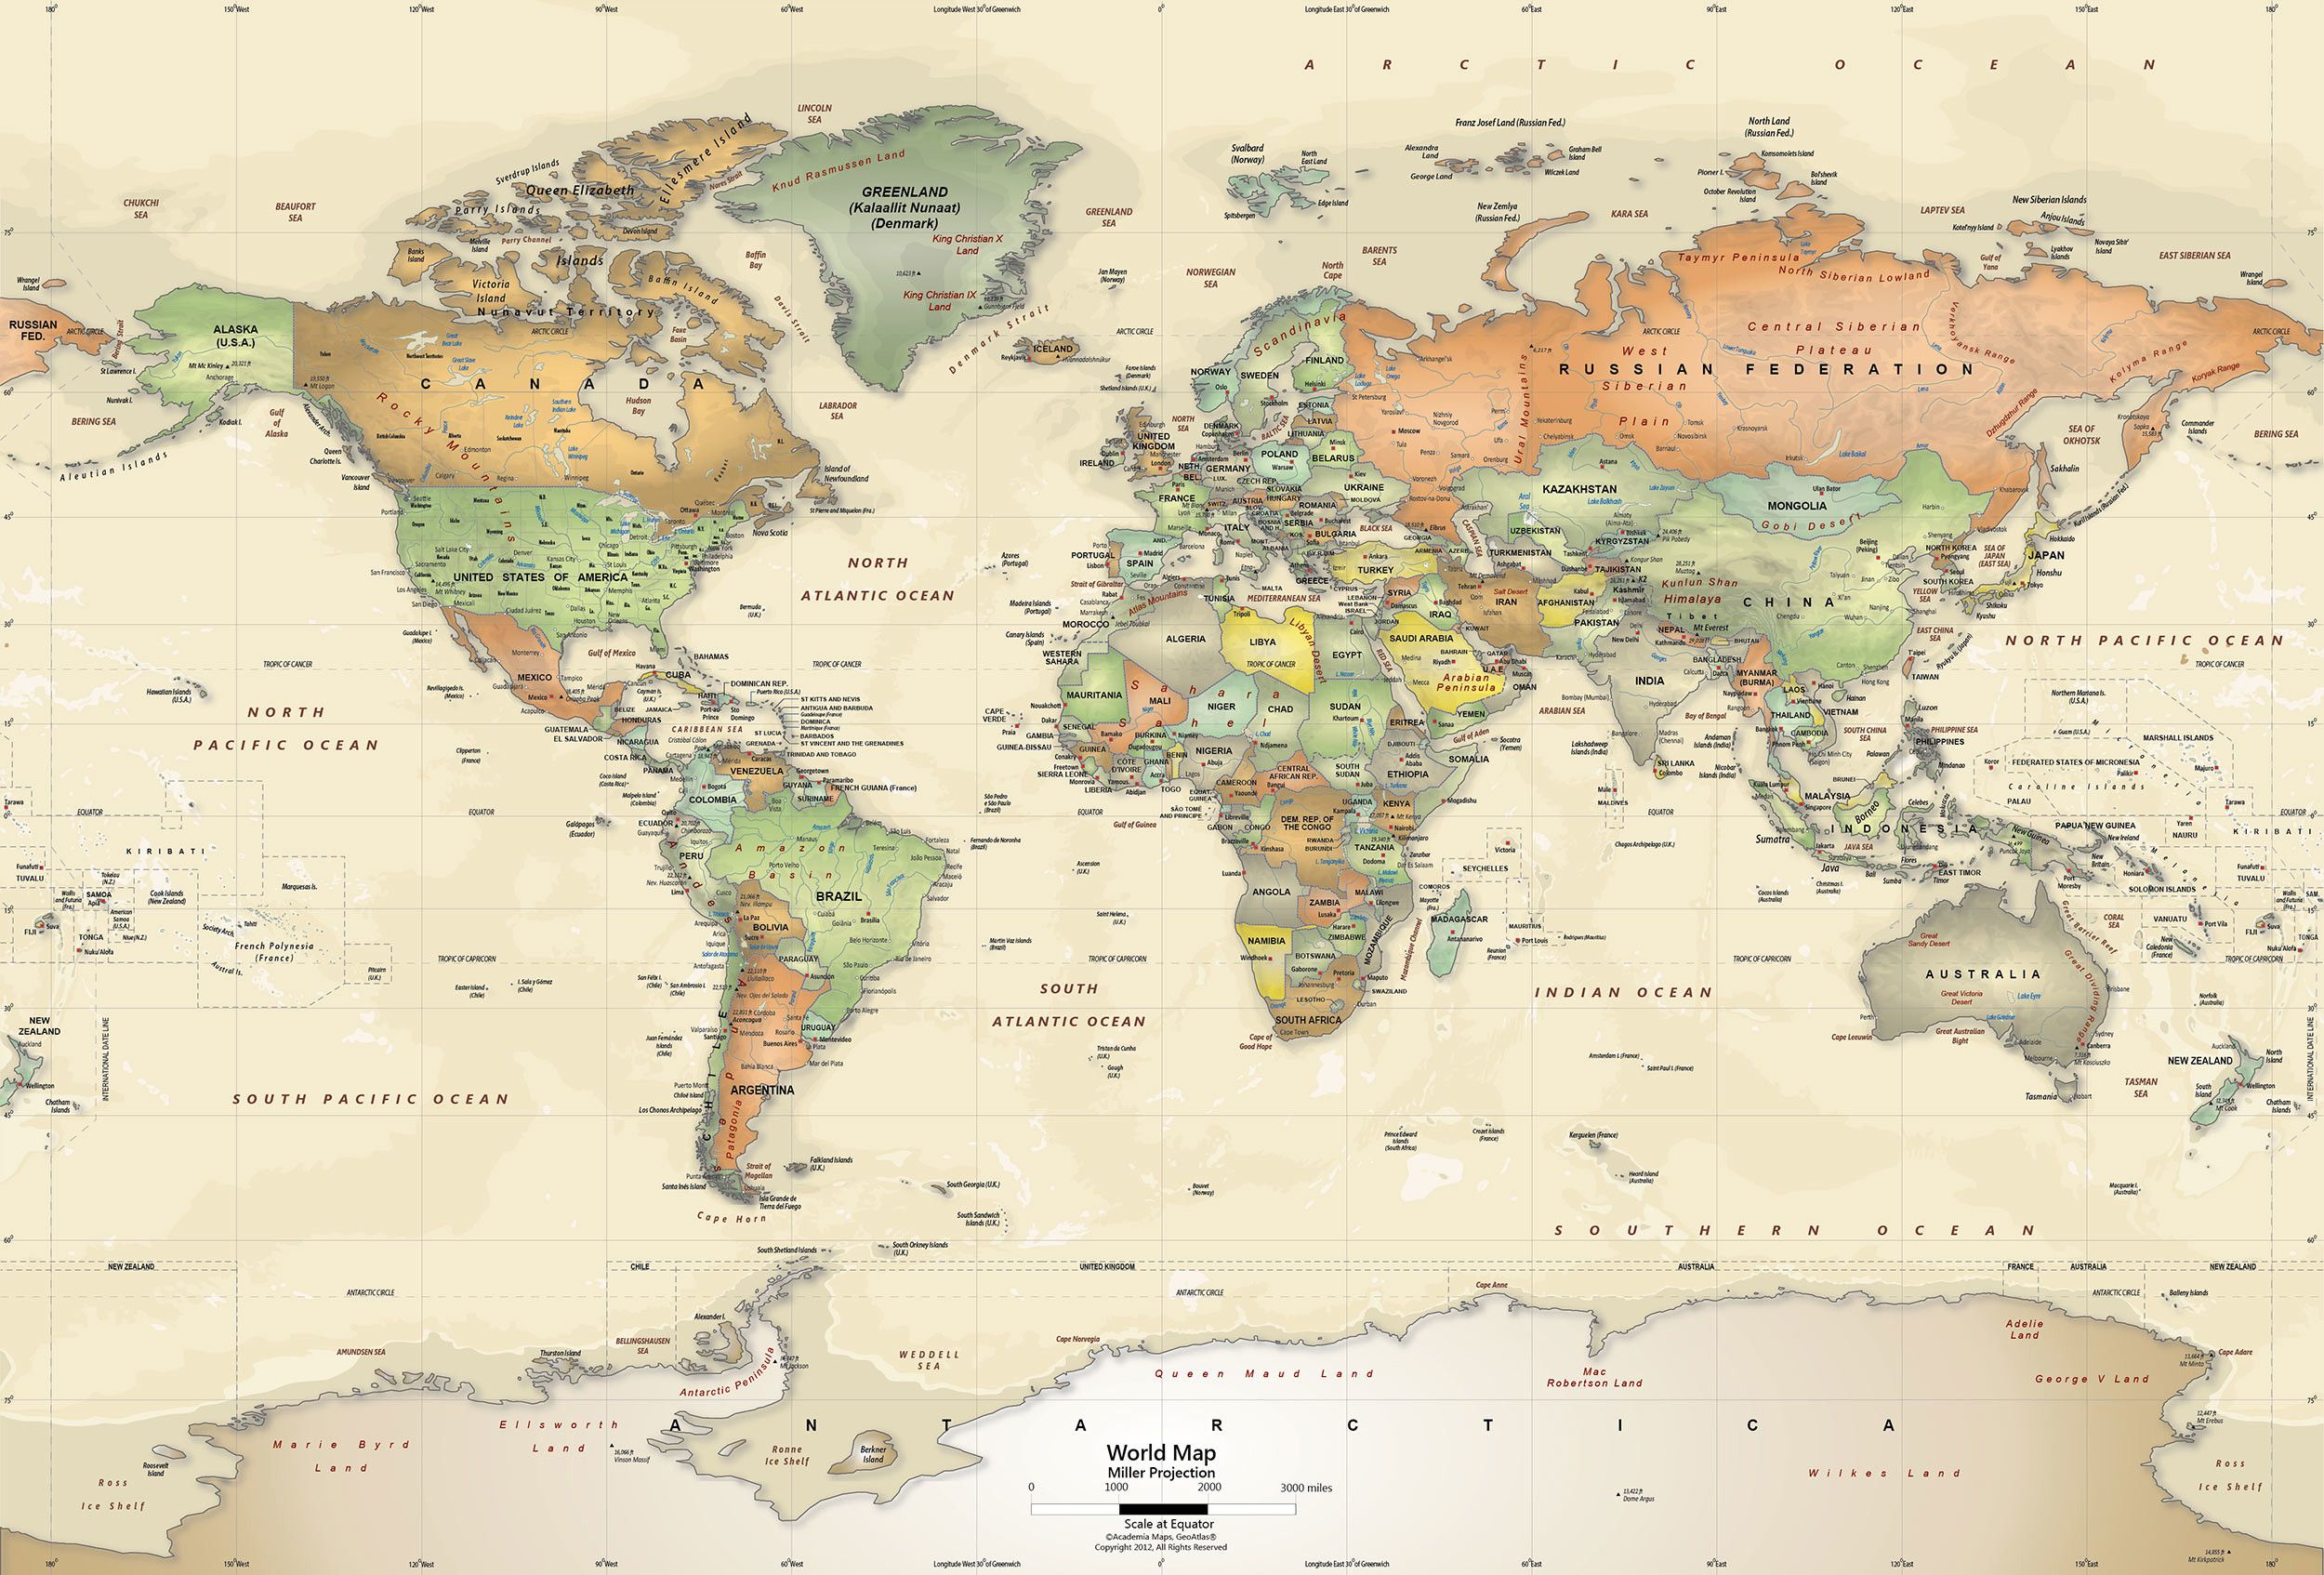 Earth Map Wallpaper